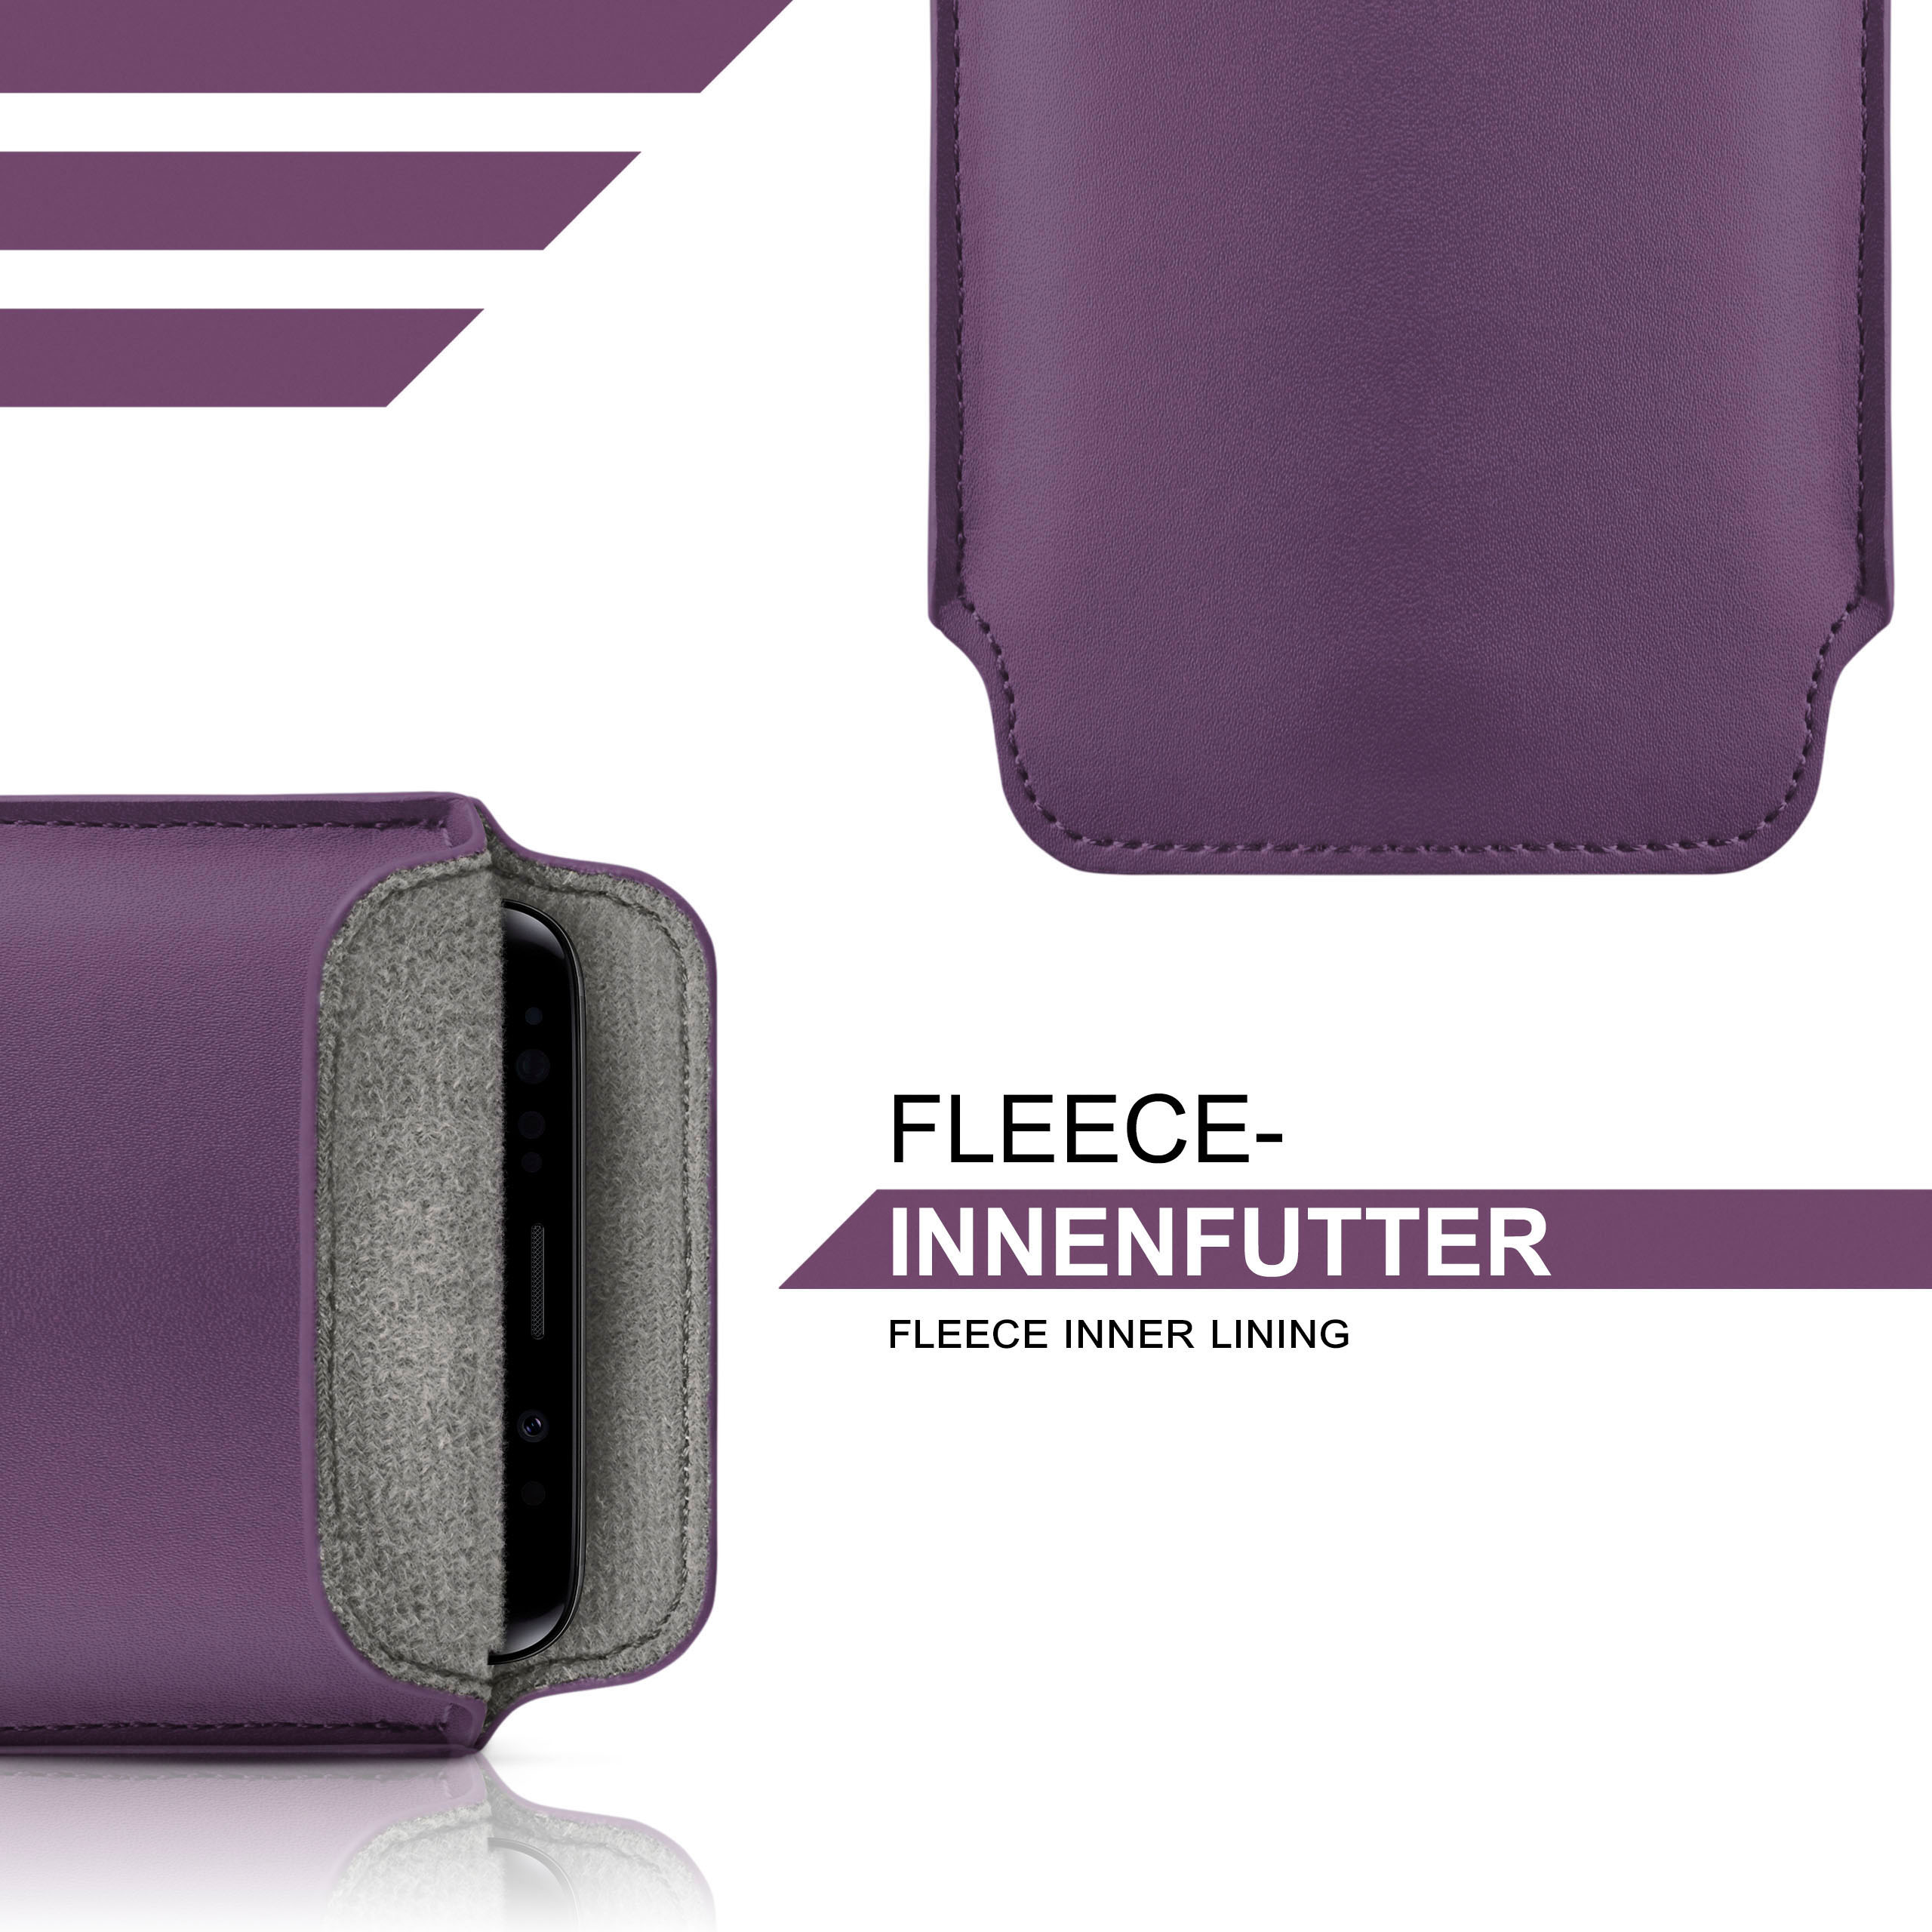 MOEX Slide Case, BlackBerry, KEYone, Full Indigo-Violet Cover